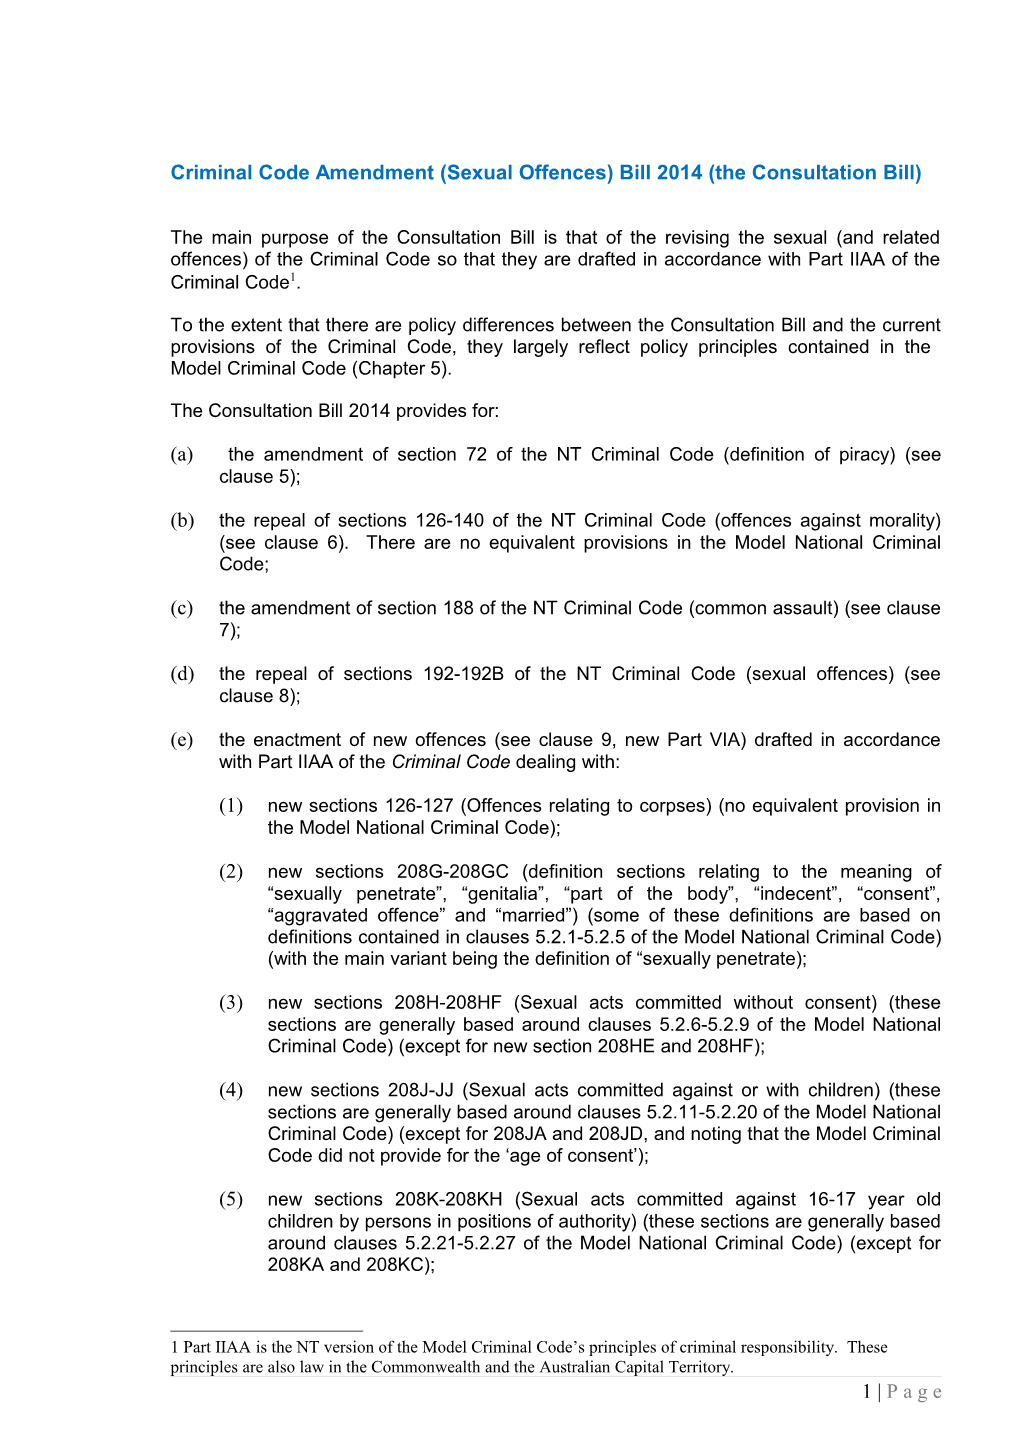 Criminal Code Amendment (Sexual Offences) Bill 2014 Summary Paper